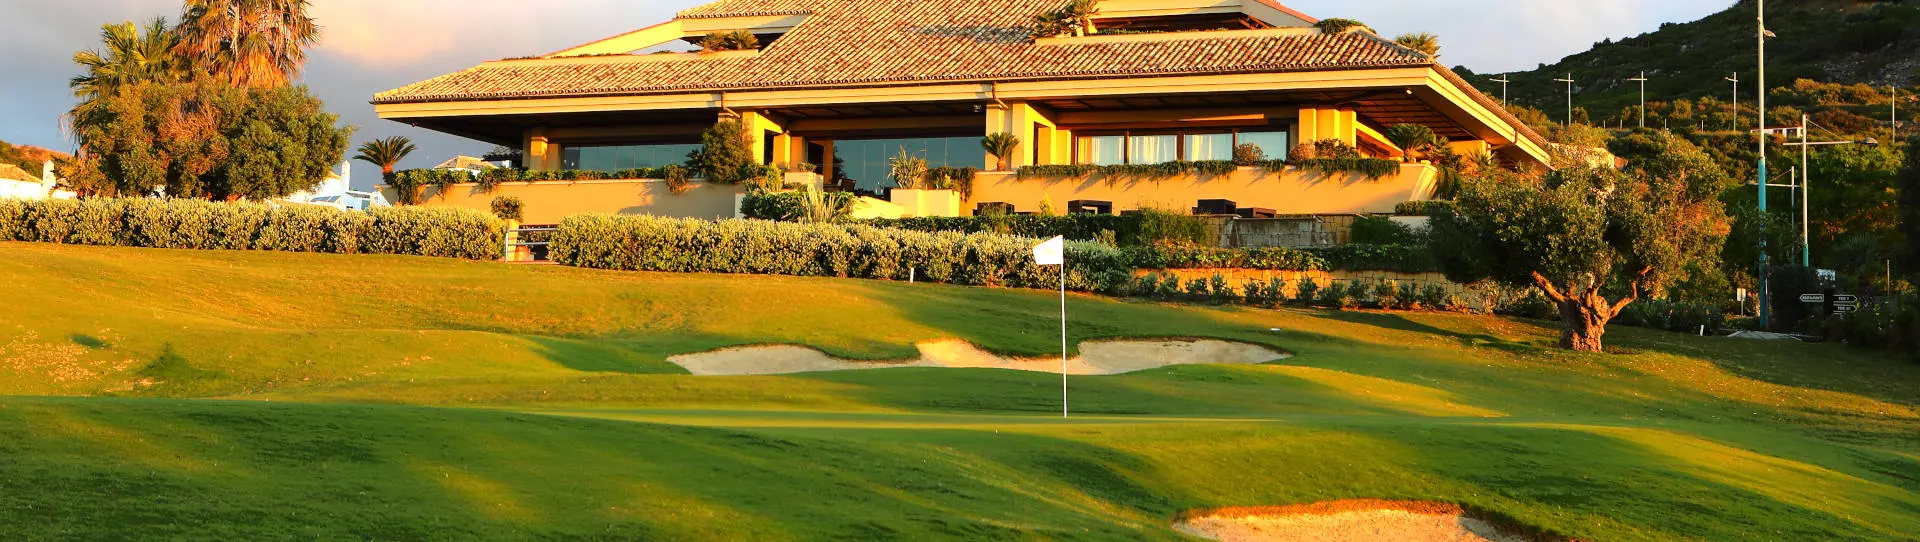 Spain Golf Driving Range - Valle Romano practice area facilities - Photo 2